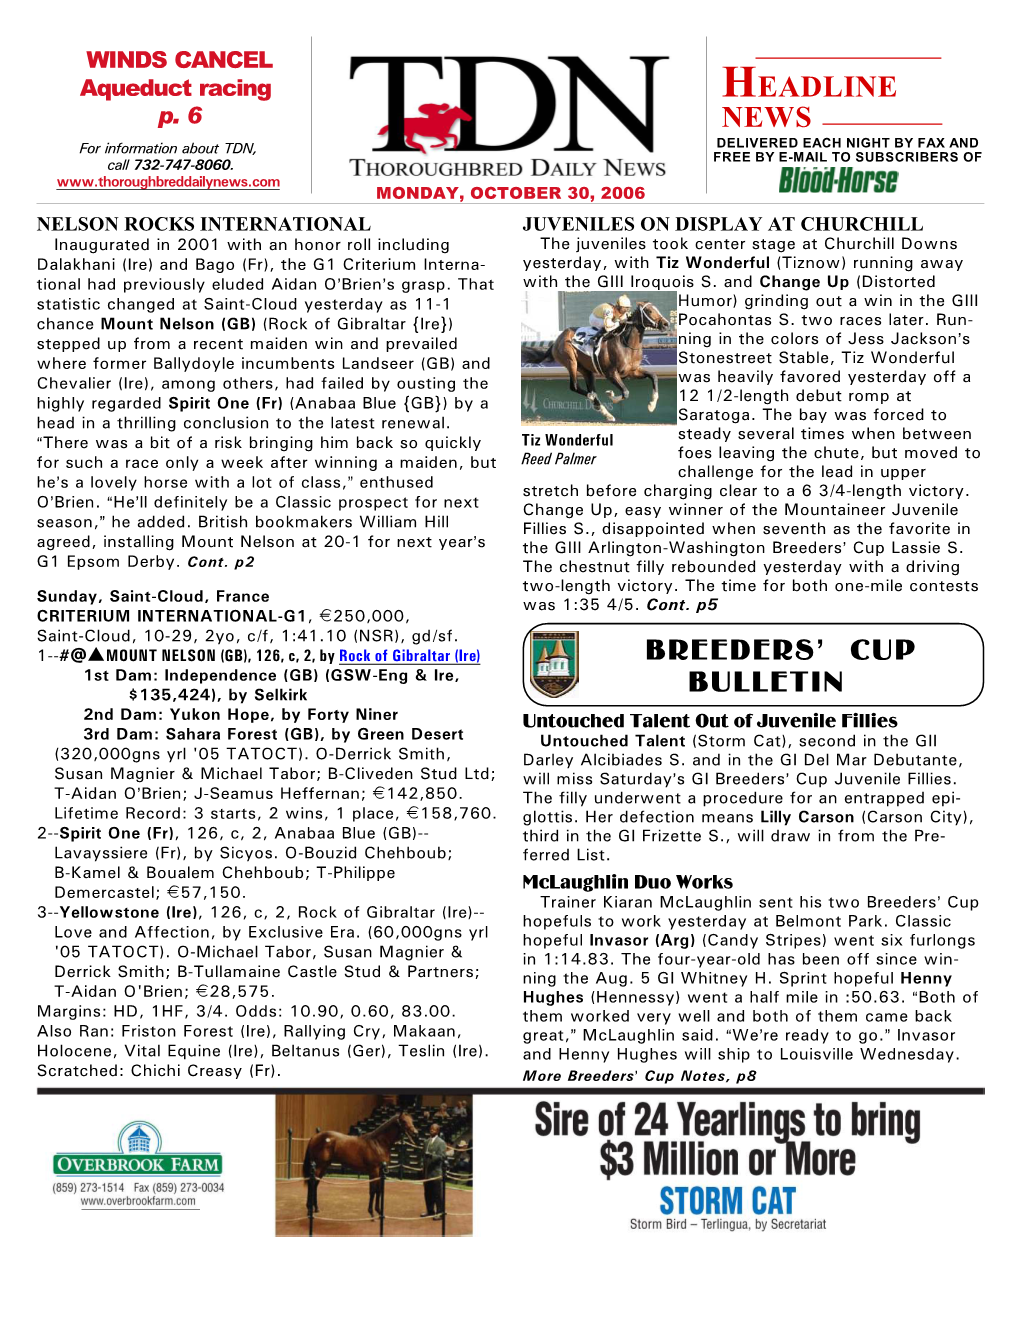 Breeders' Cup Bulletin Headline News